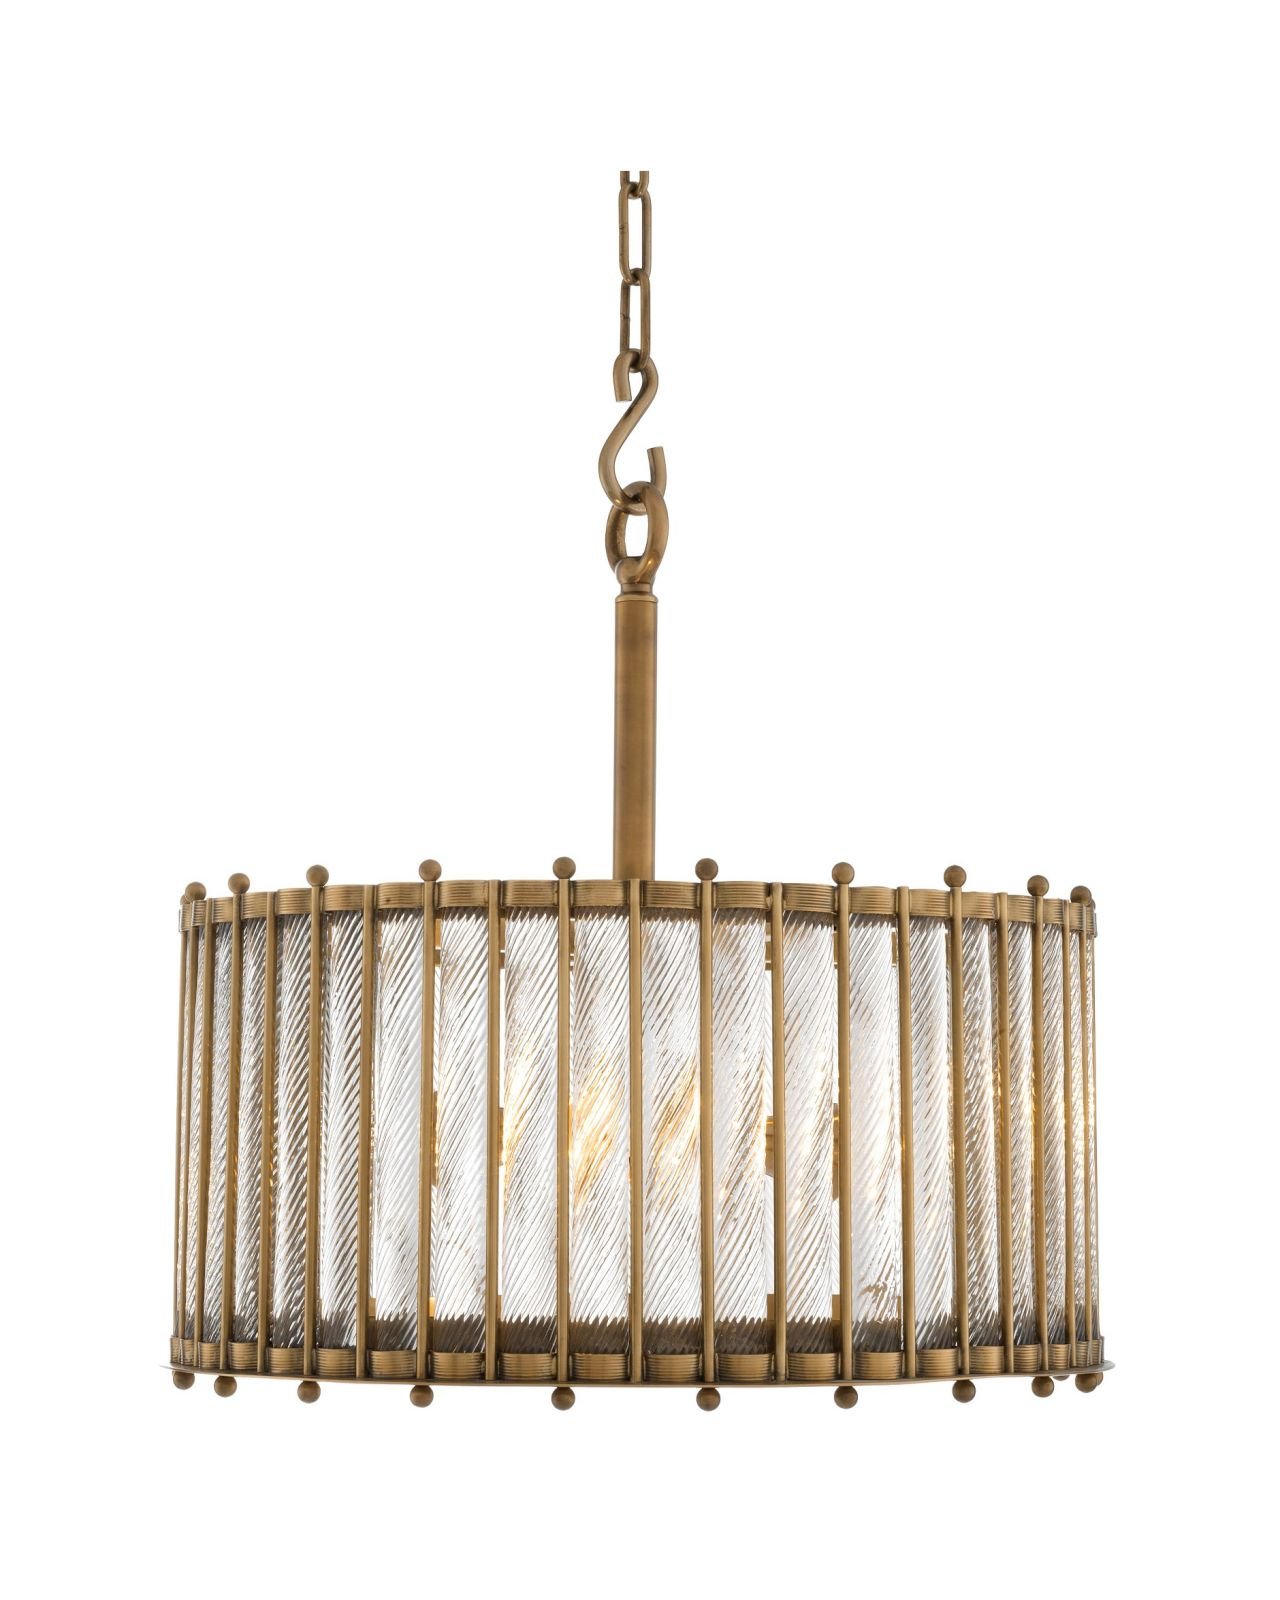 Tiziano Single Ceiling Lamp